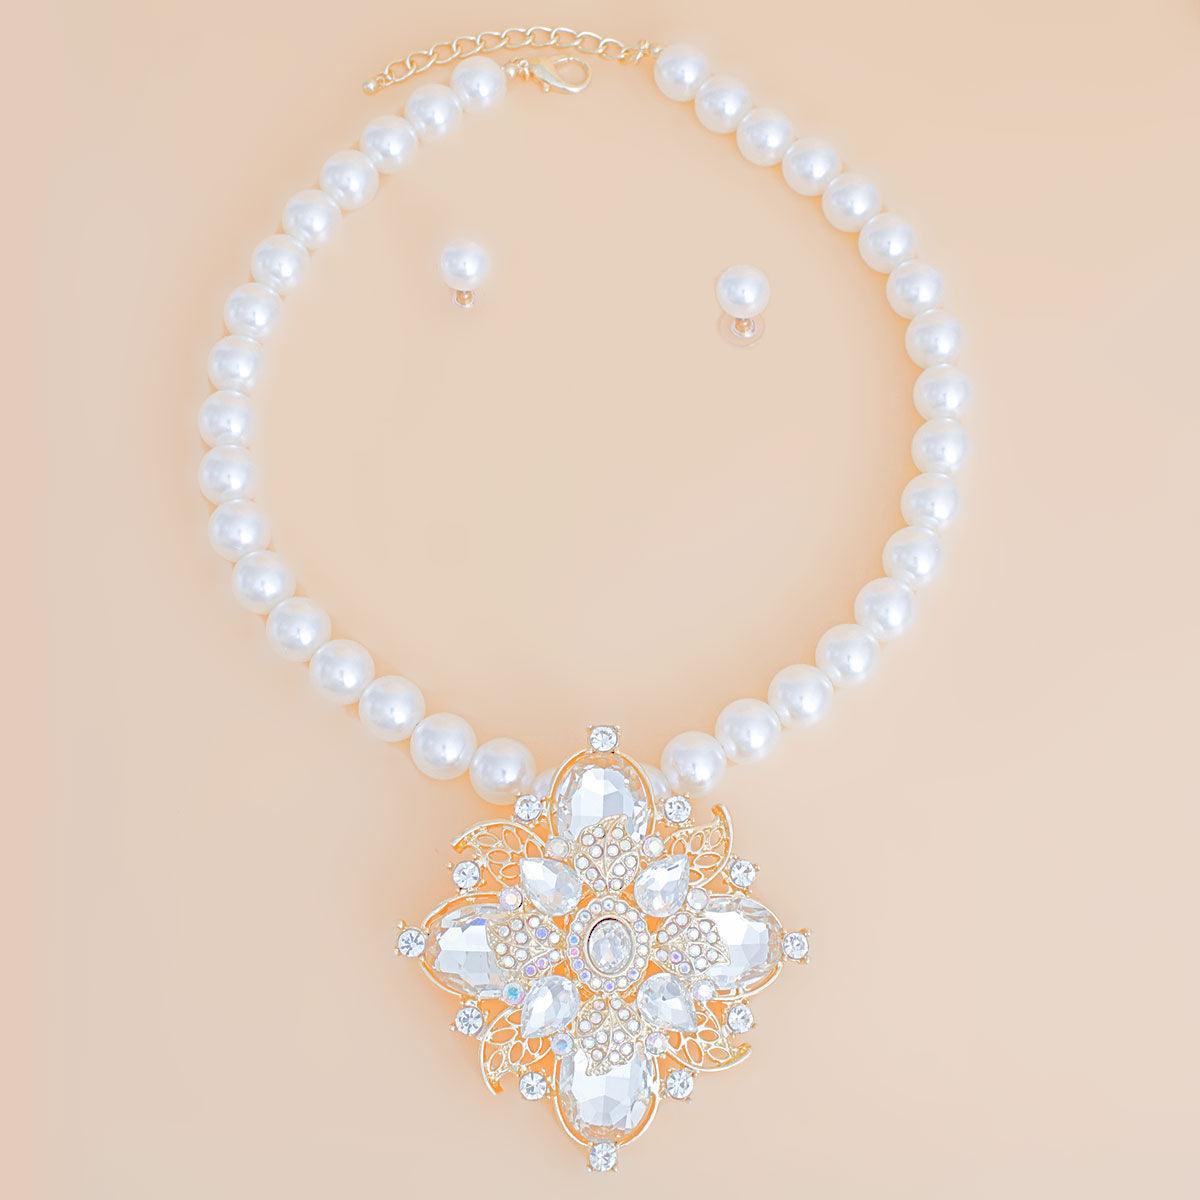 Get Noticed: Stunning Filigree Flower Cream Necklace Set